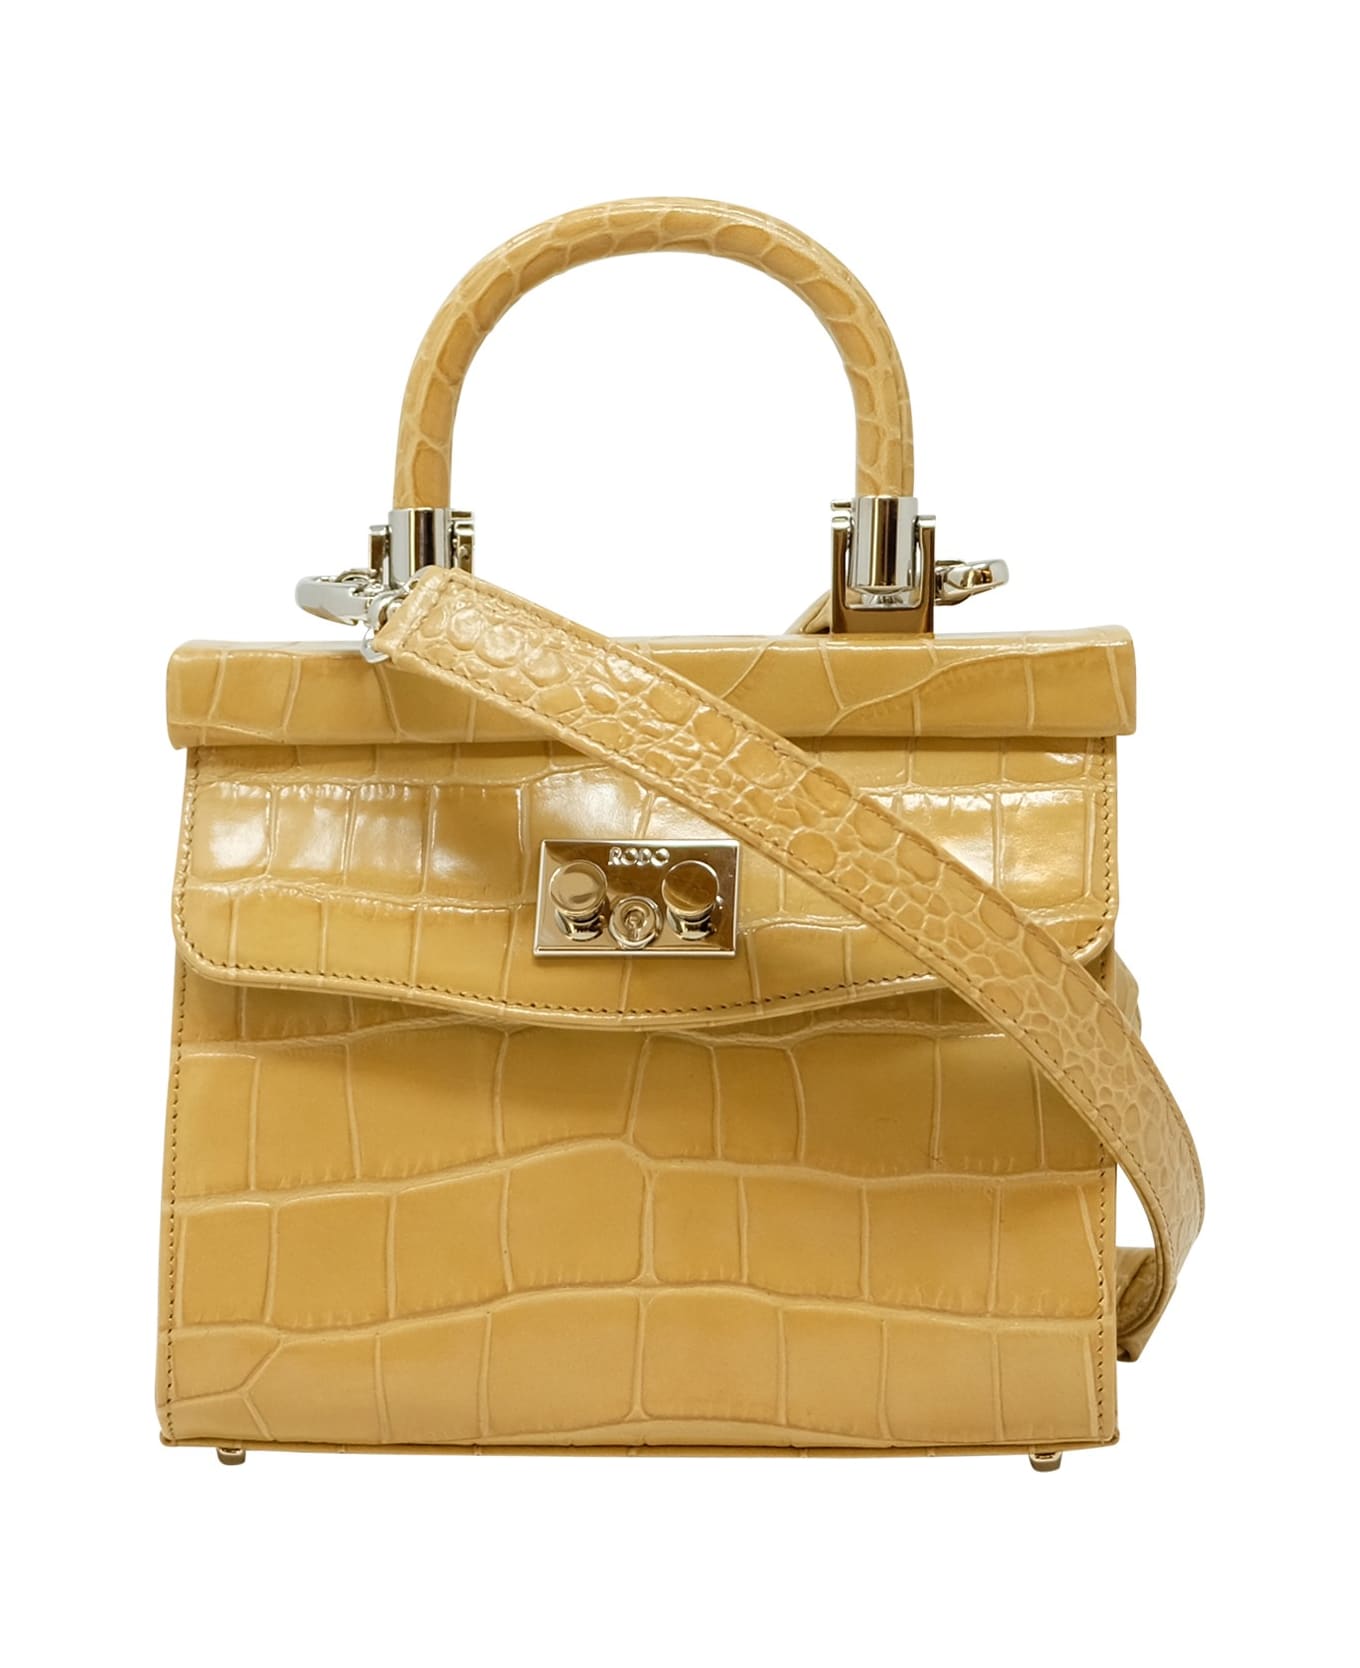 Rodo Sahara Croco Leather Paris Handbag